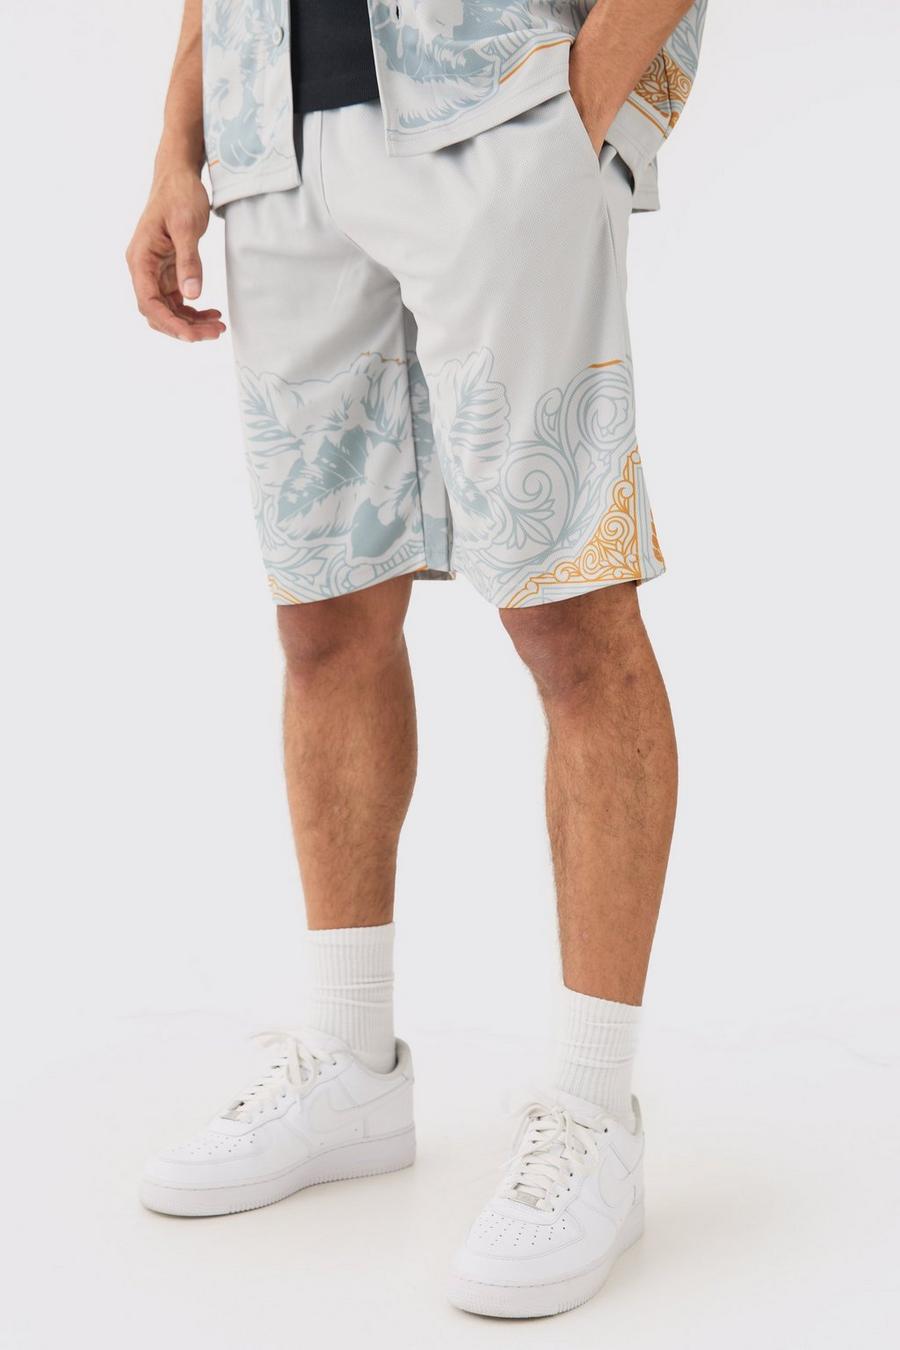 Lockere Mesh-Shorts mit Print, Light grey